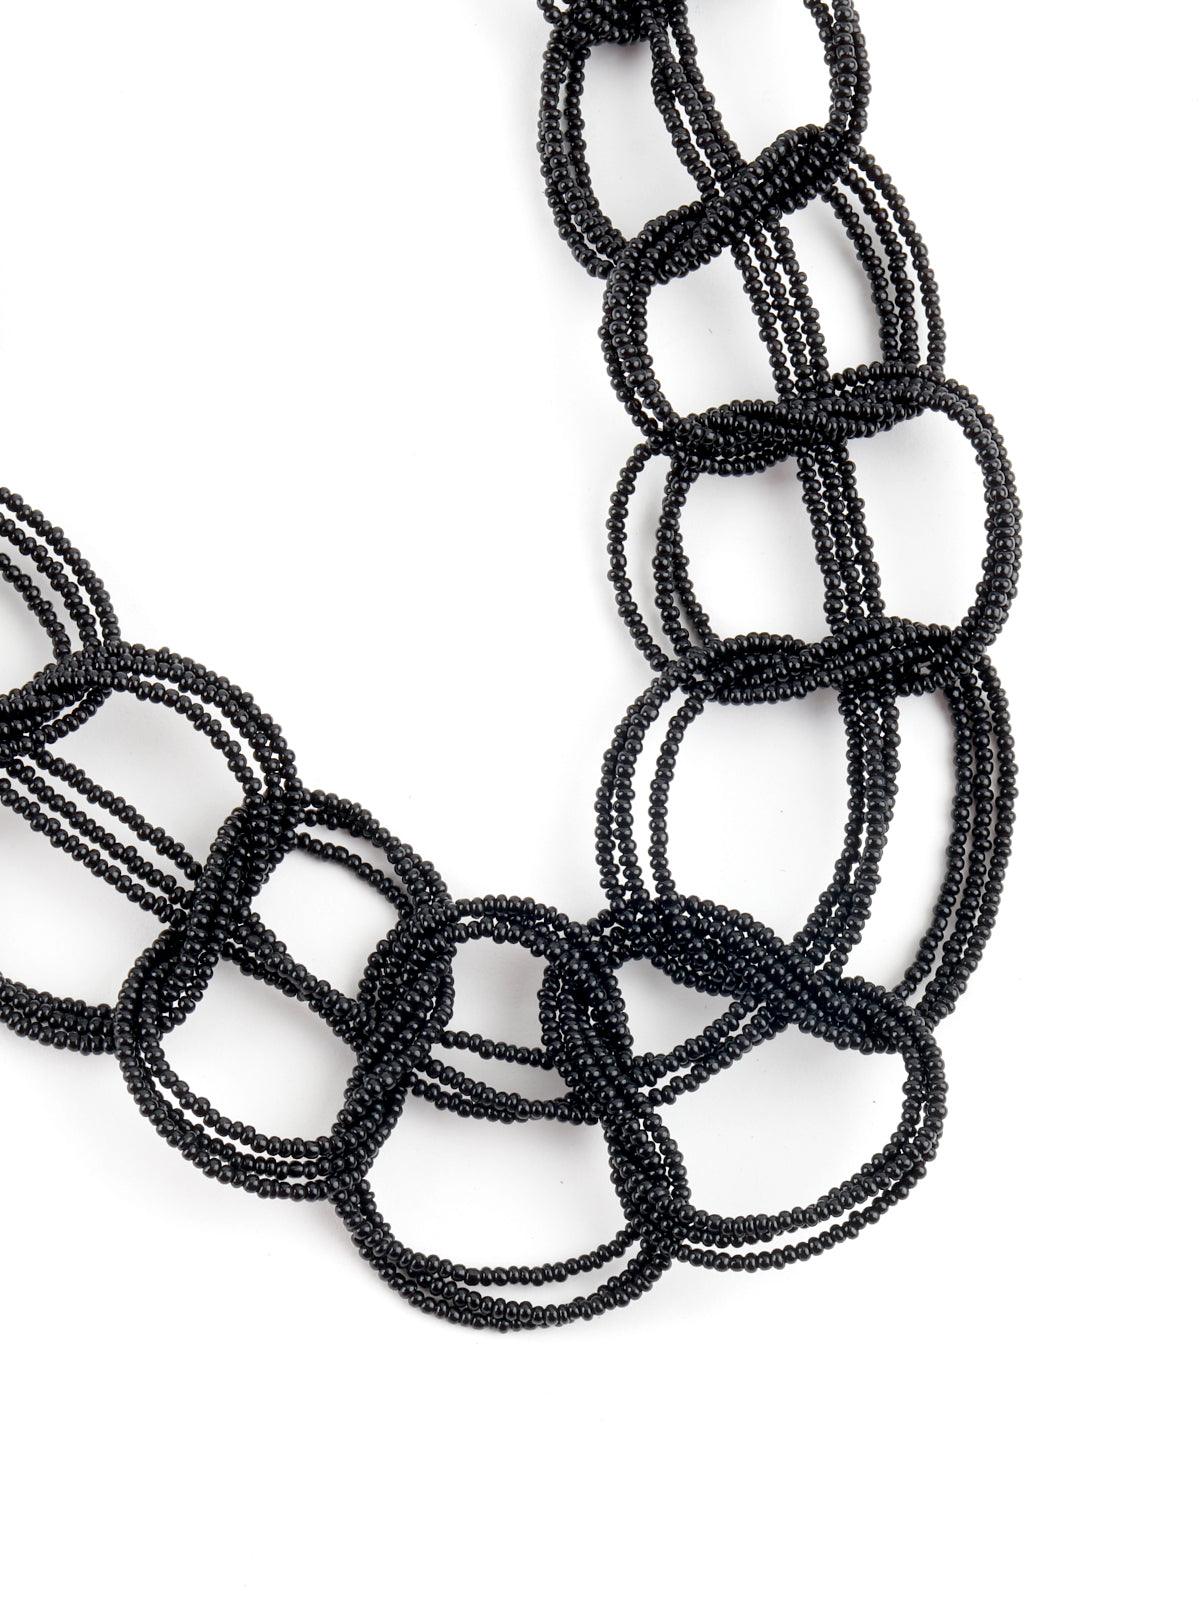 Black Beads Entangled Chain - Odette